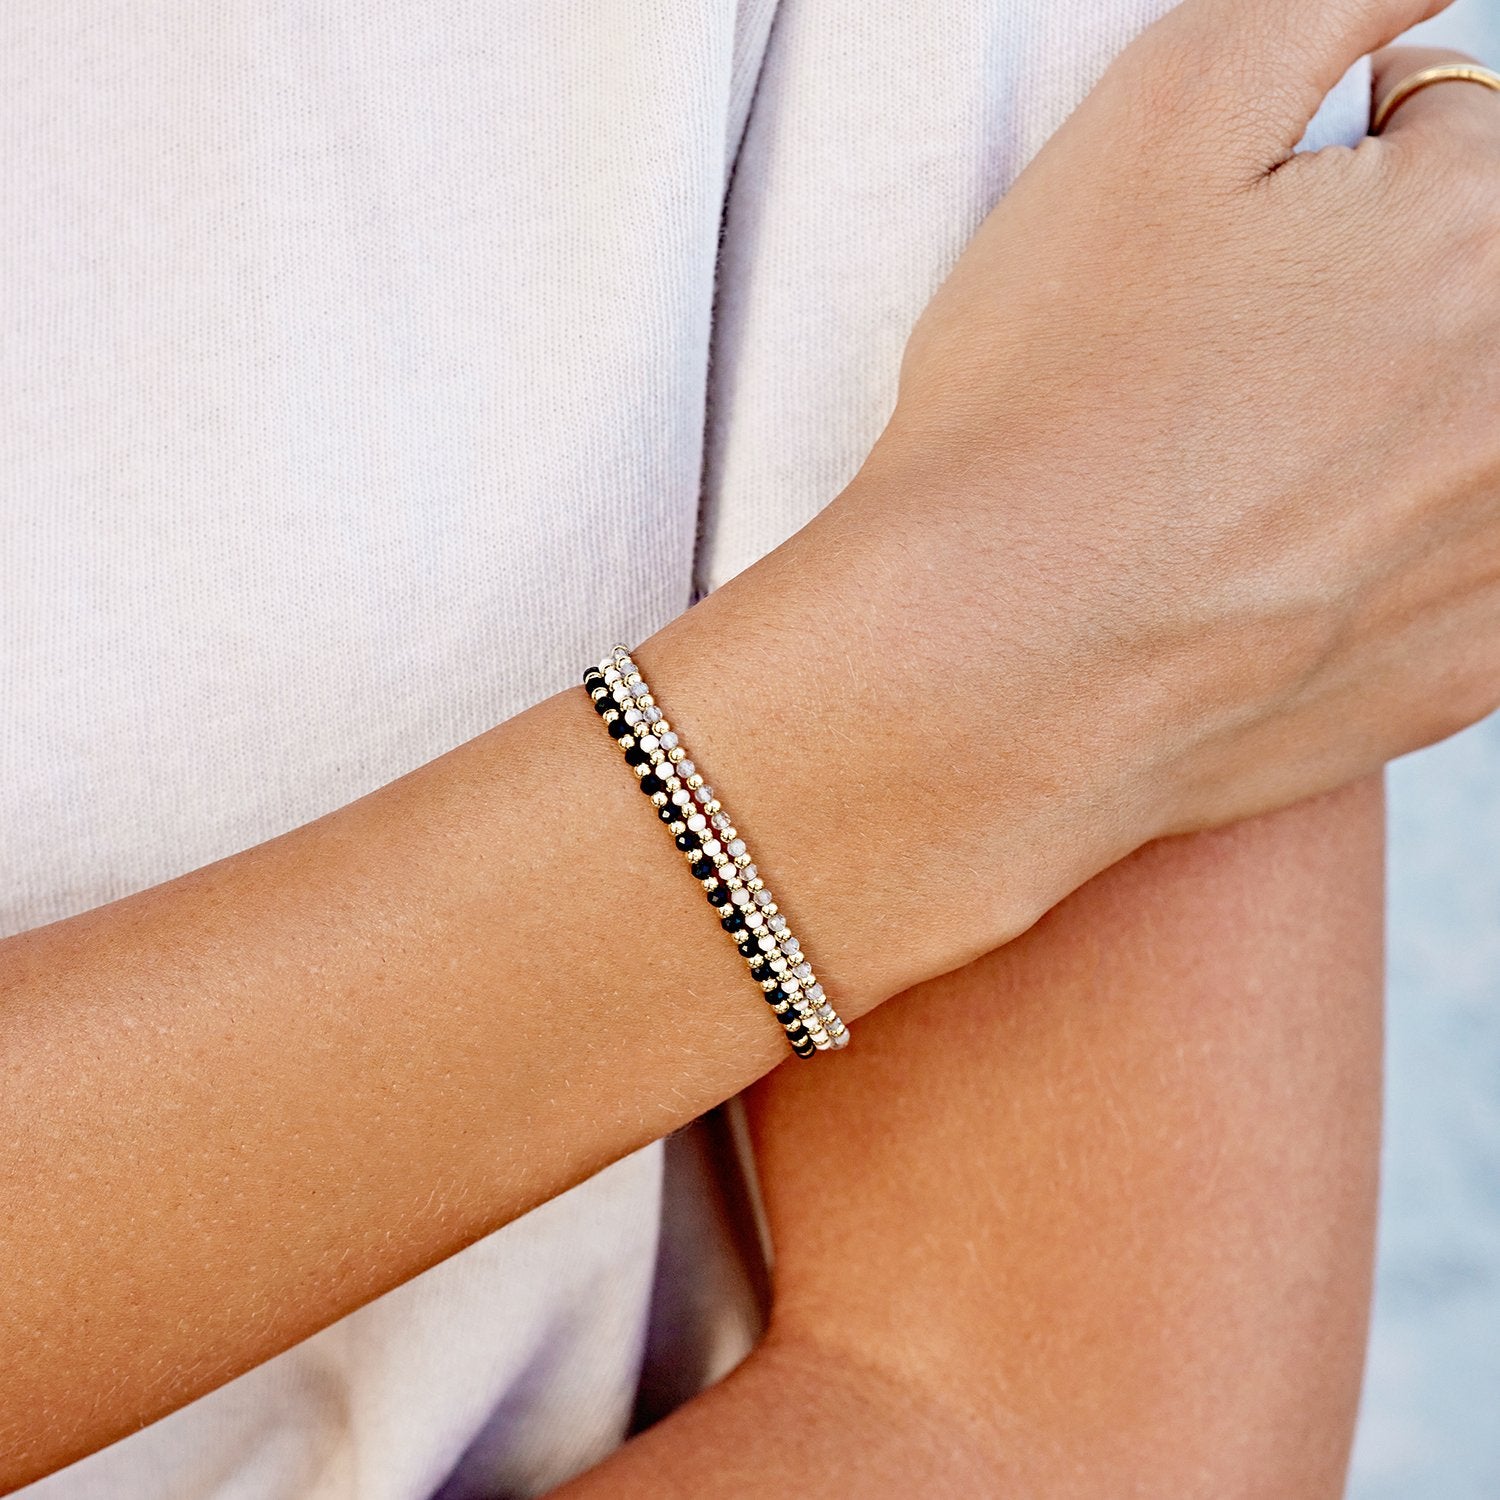 Power gemstone brooks bracelet for protection - gold / black onyx